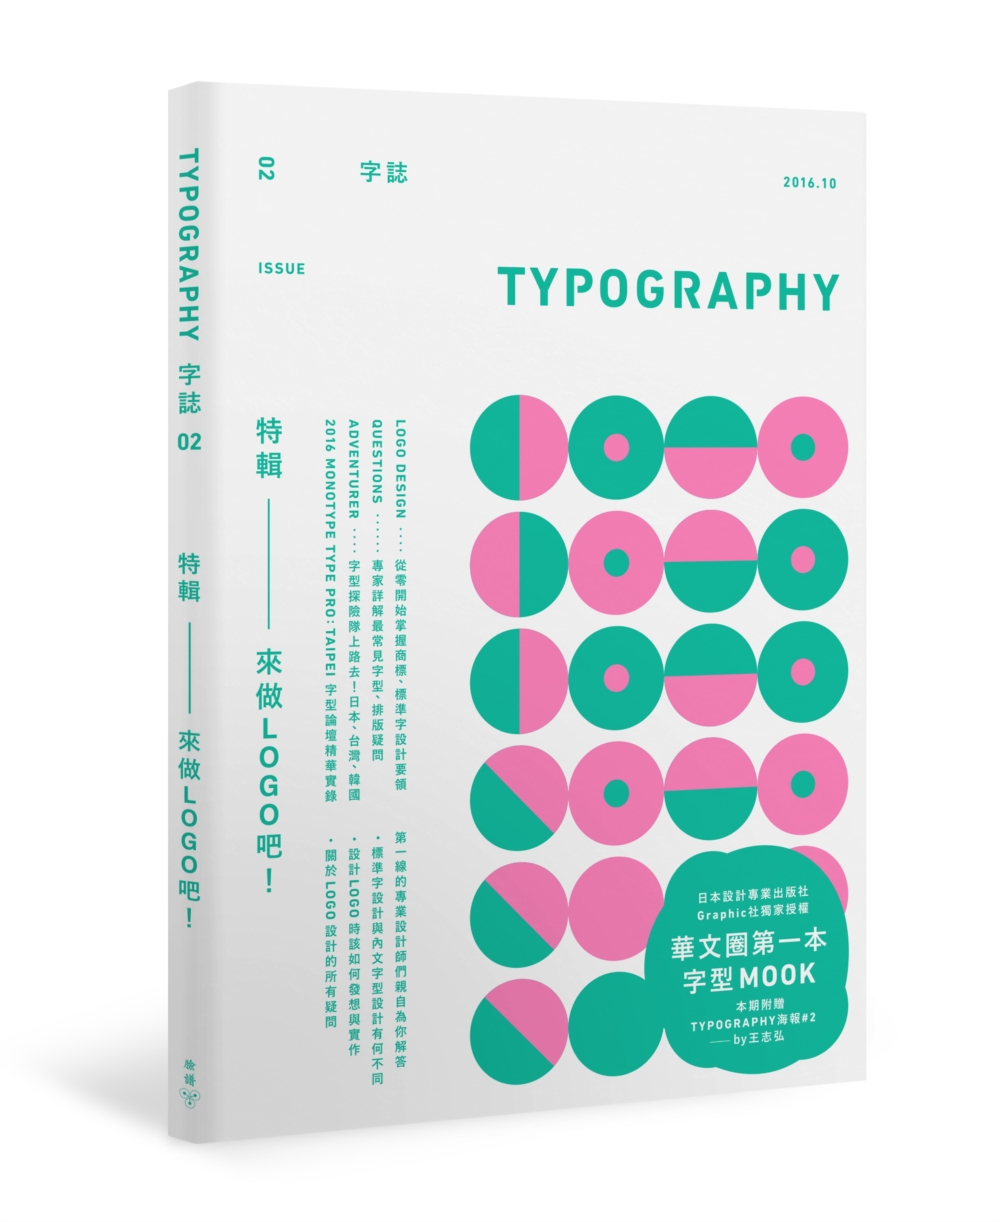 Typography 字誌：Issue 02 來做LOGO吧!